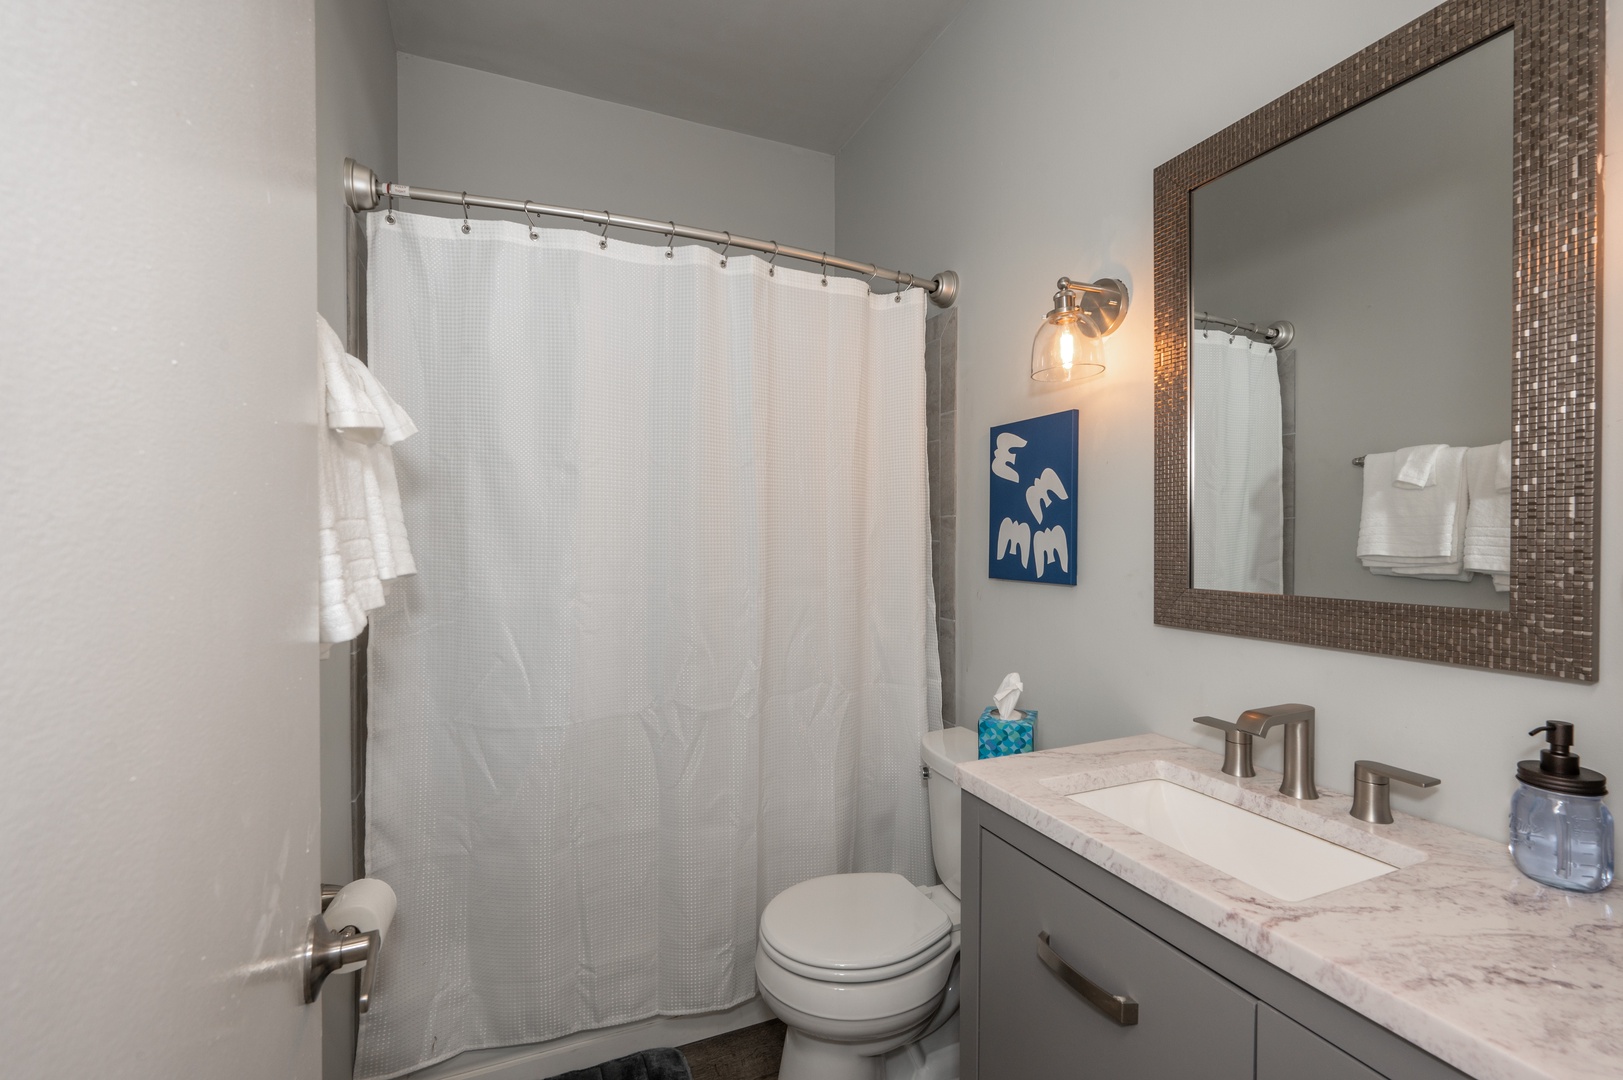 Unit 2: Sleek full bathroom with single vanity and shower